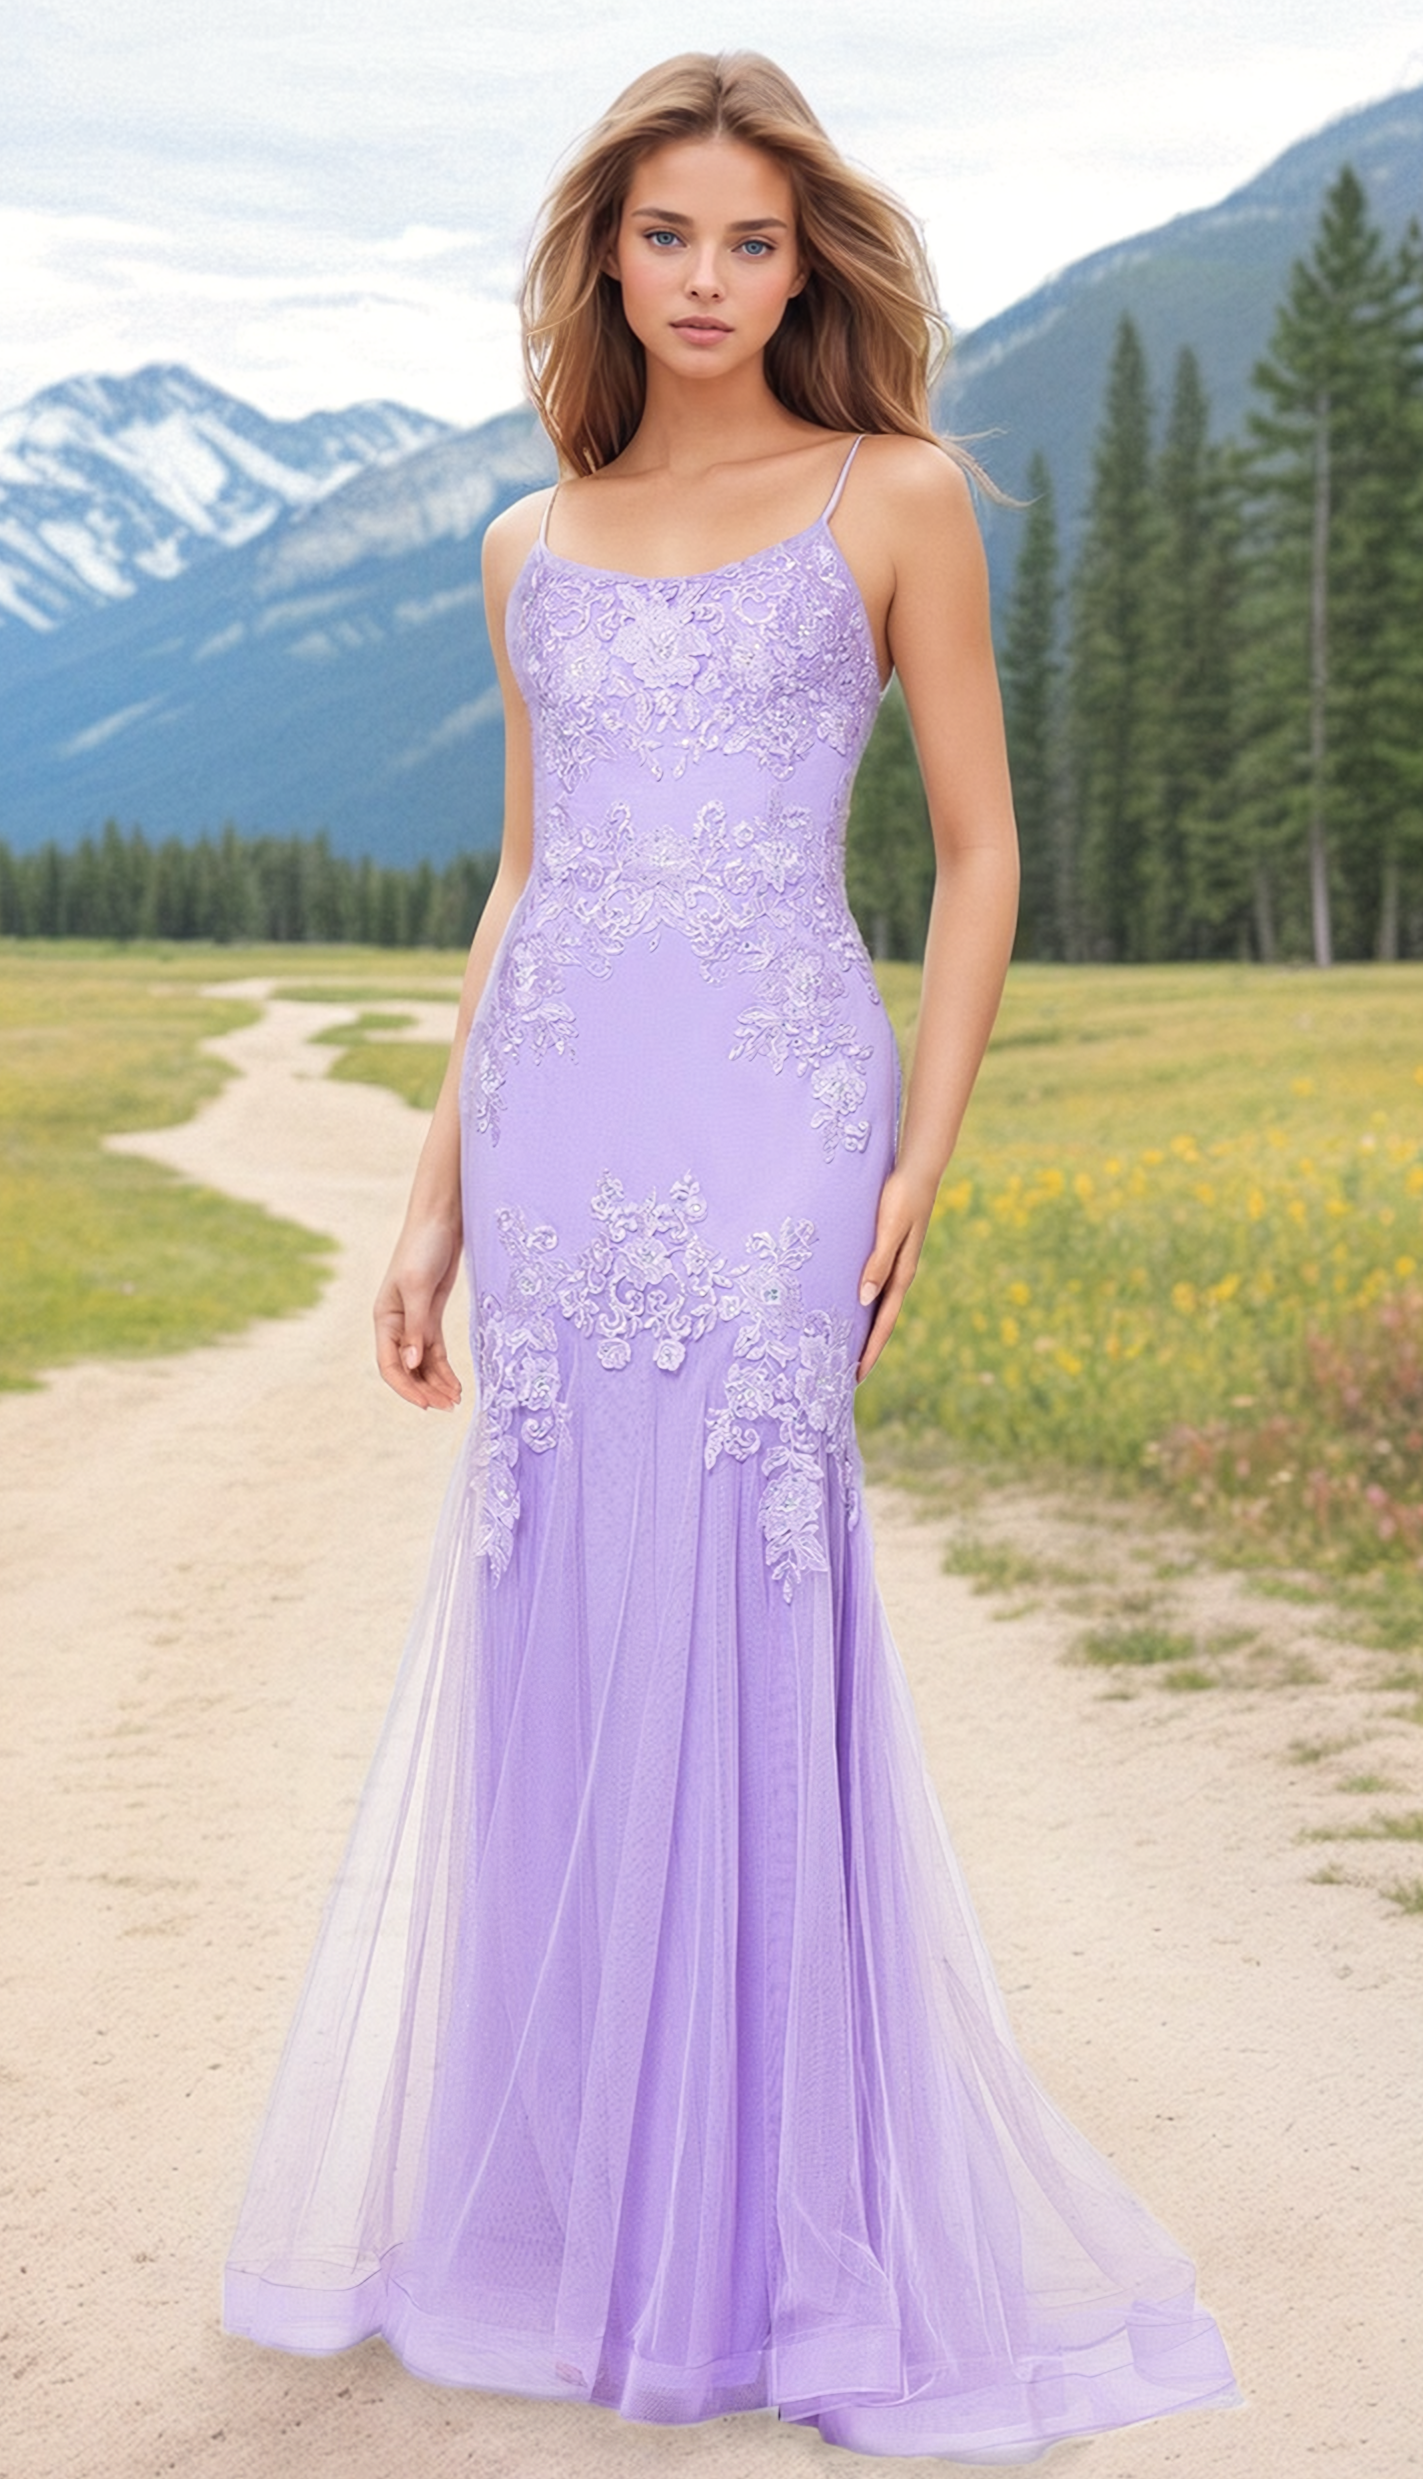 Blondie Nites Lilac Purple Long Prom Dress 4706BN